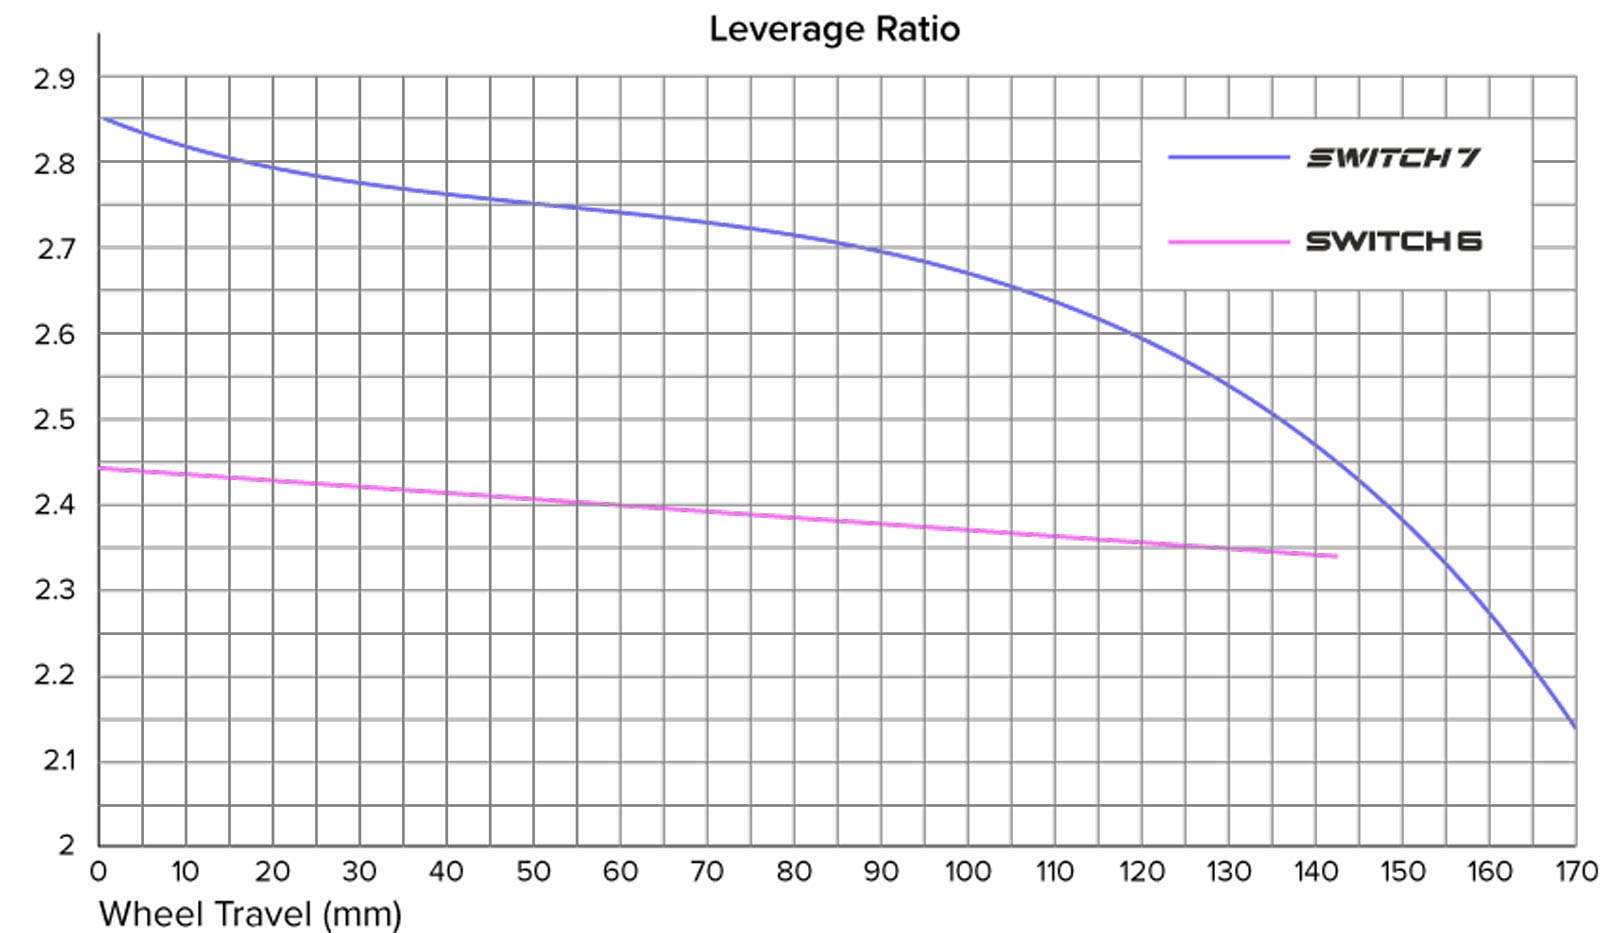 comaparison of orange switch 6 and switch 7 leverage ratios on same graph